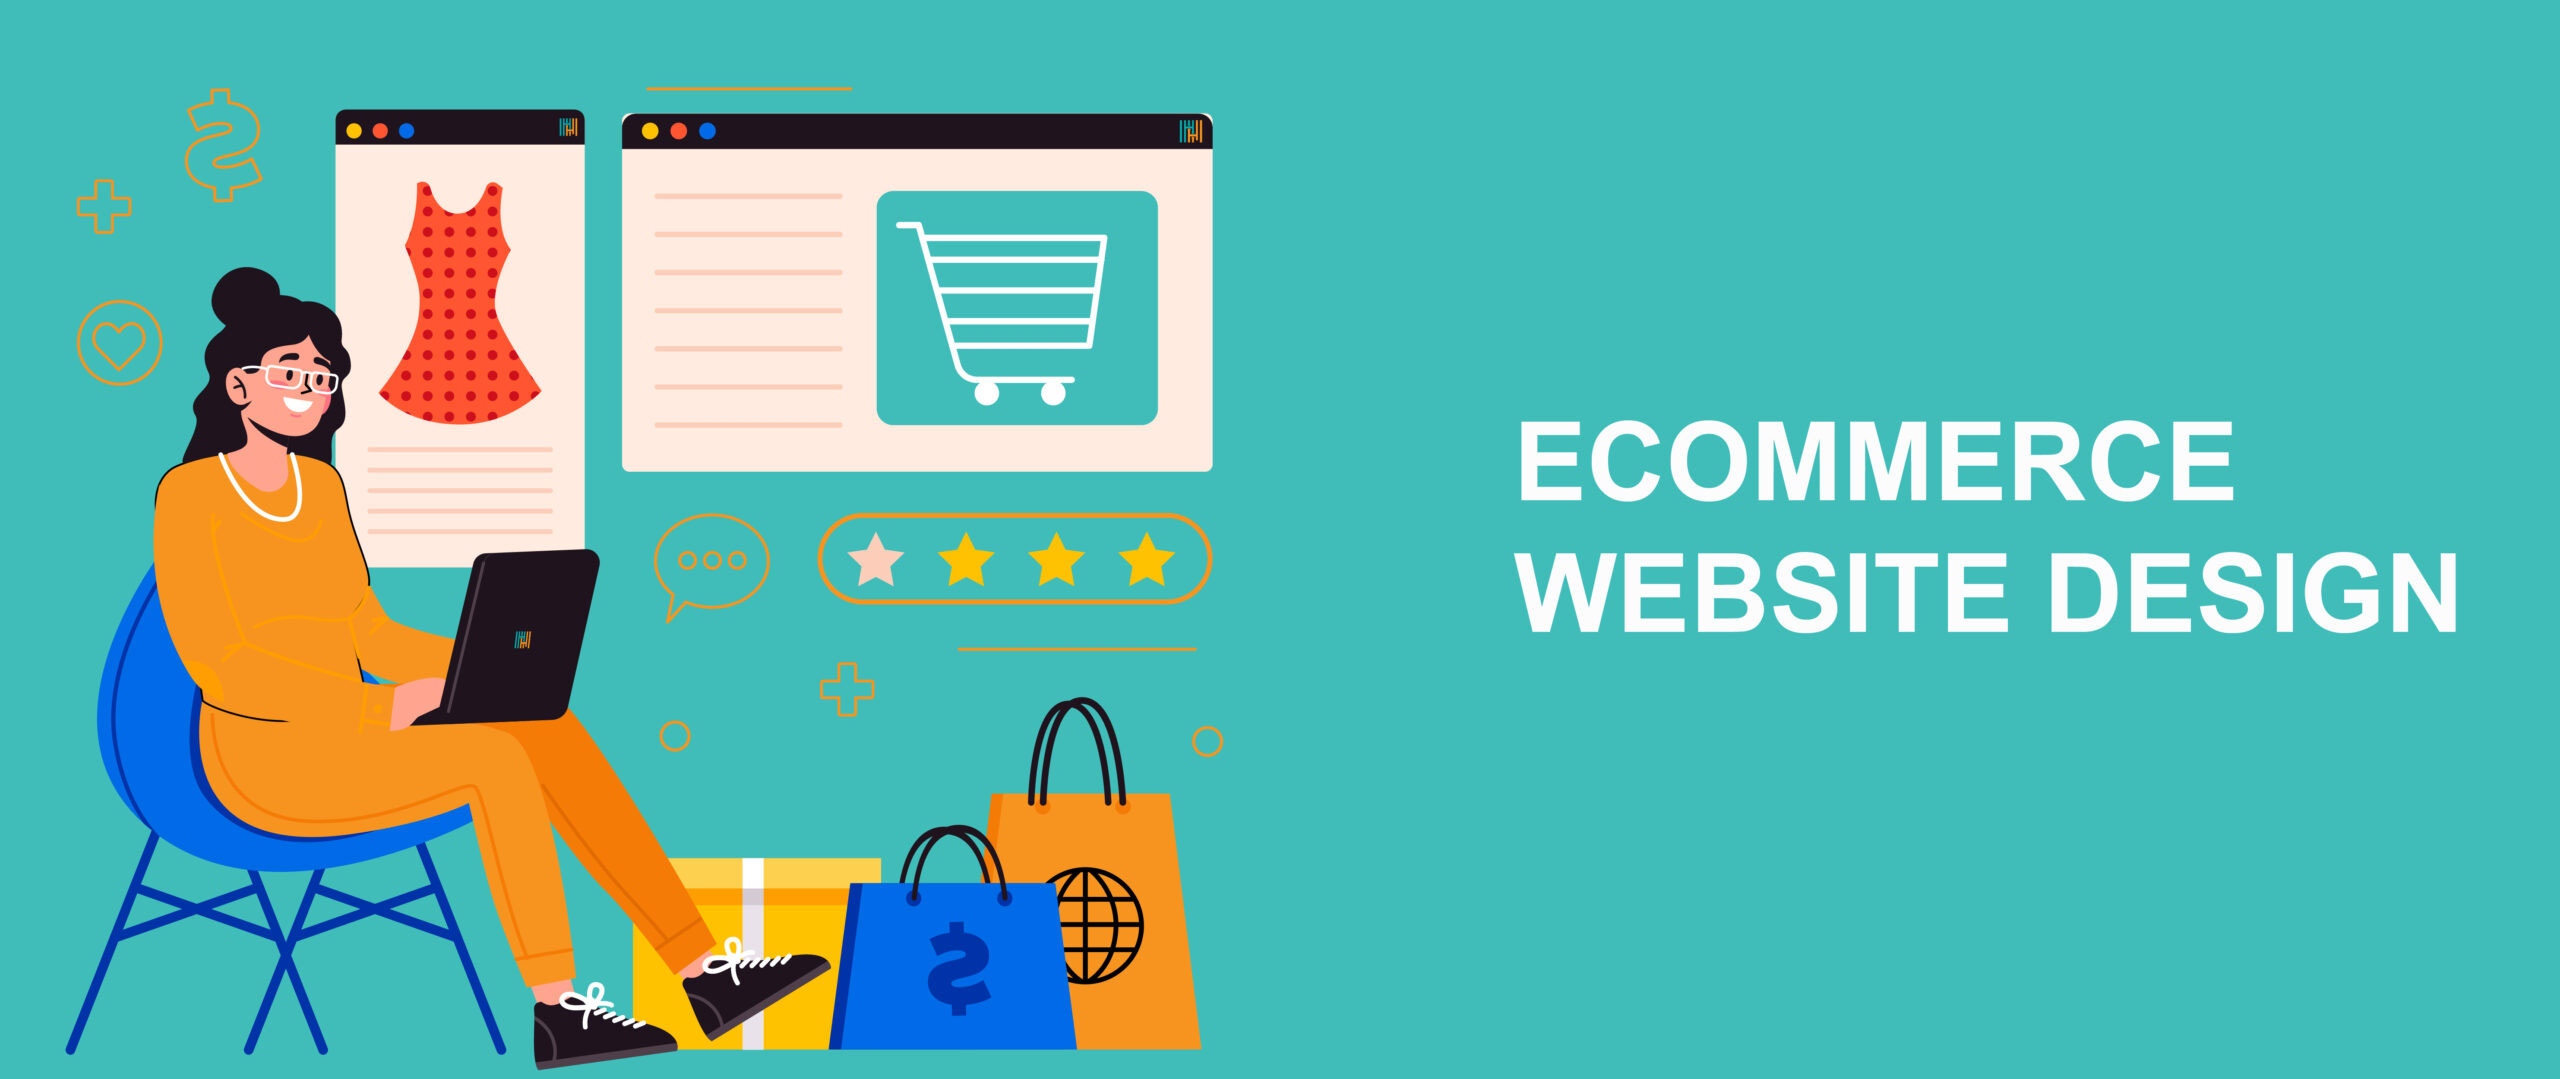 Ecommerce Website Development Company in Bangladesh